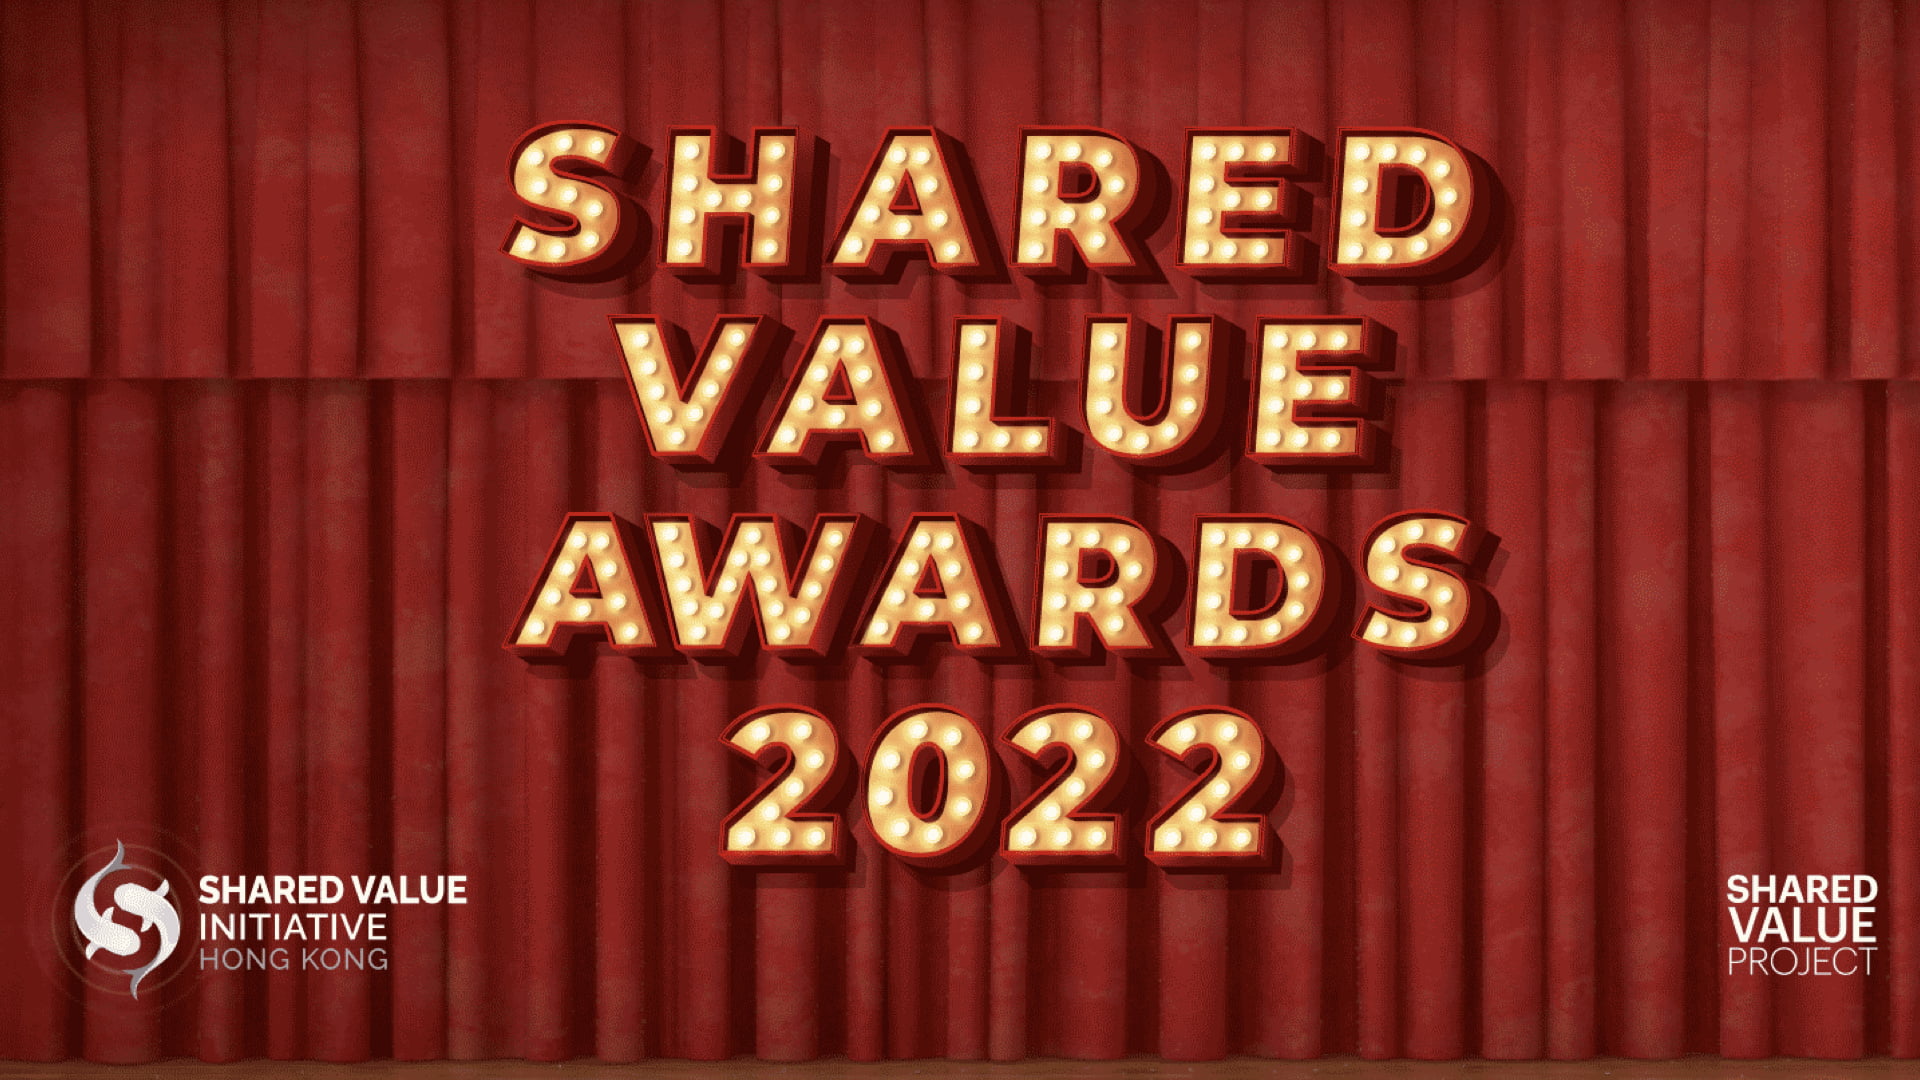 Shared Value Awards 2022